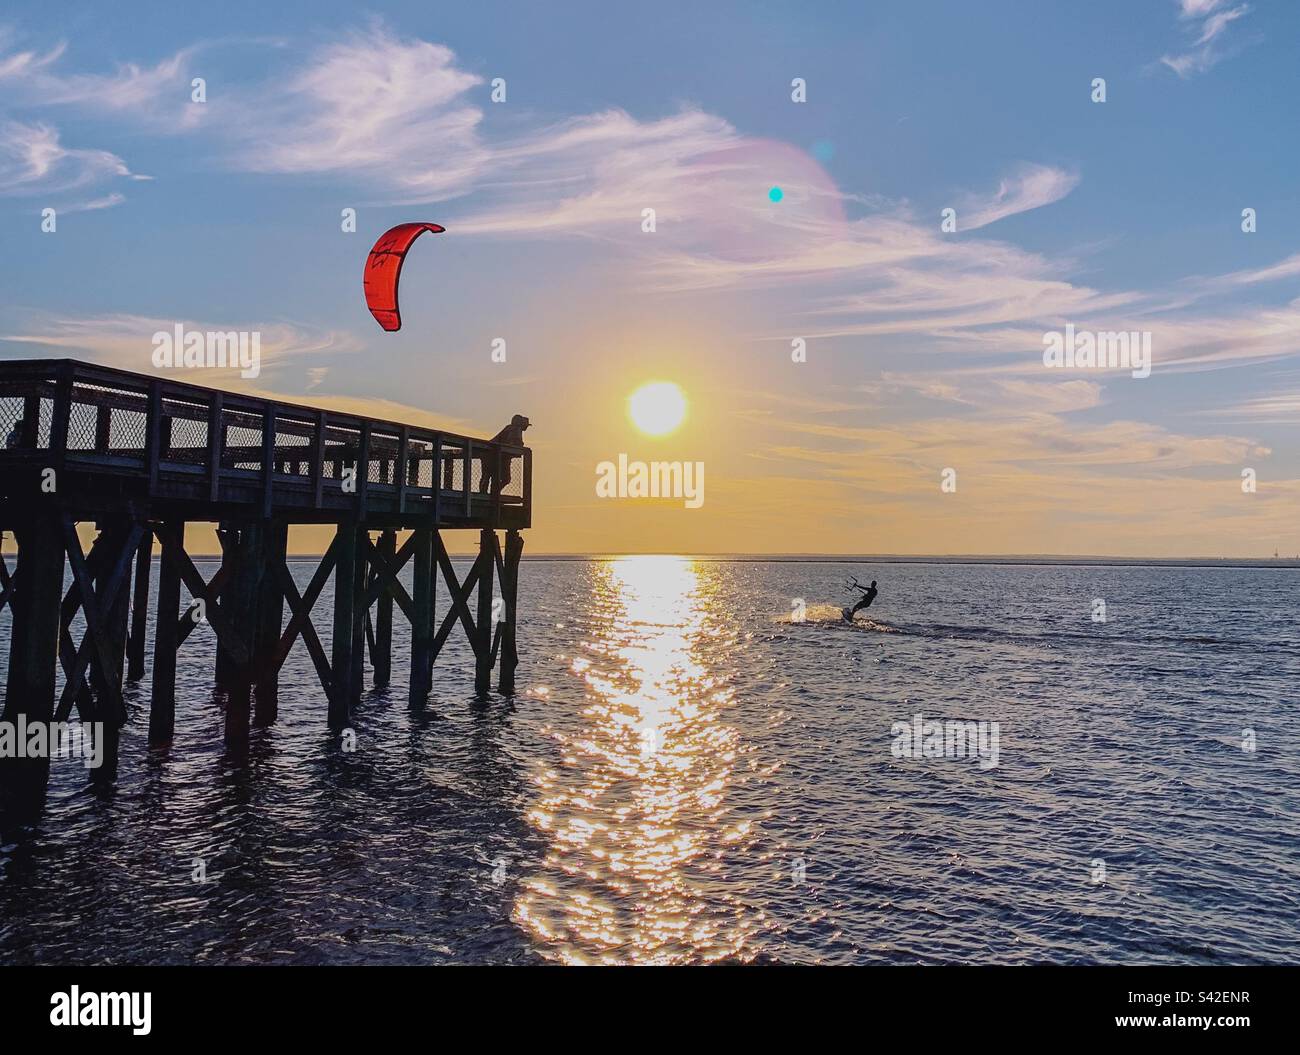 Kitesurfing on Mobile Bay at sunset Stock Photo